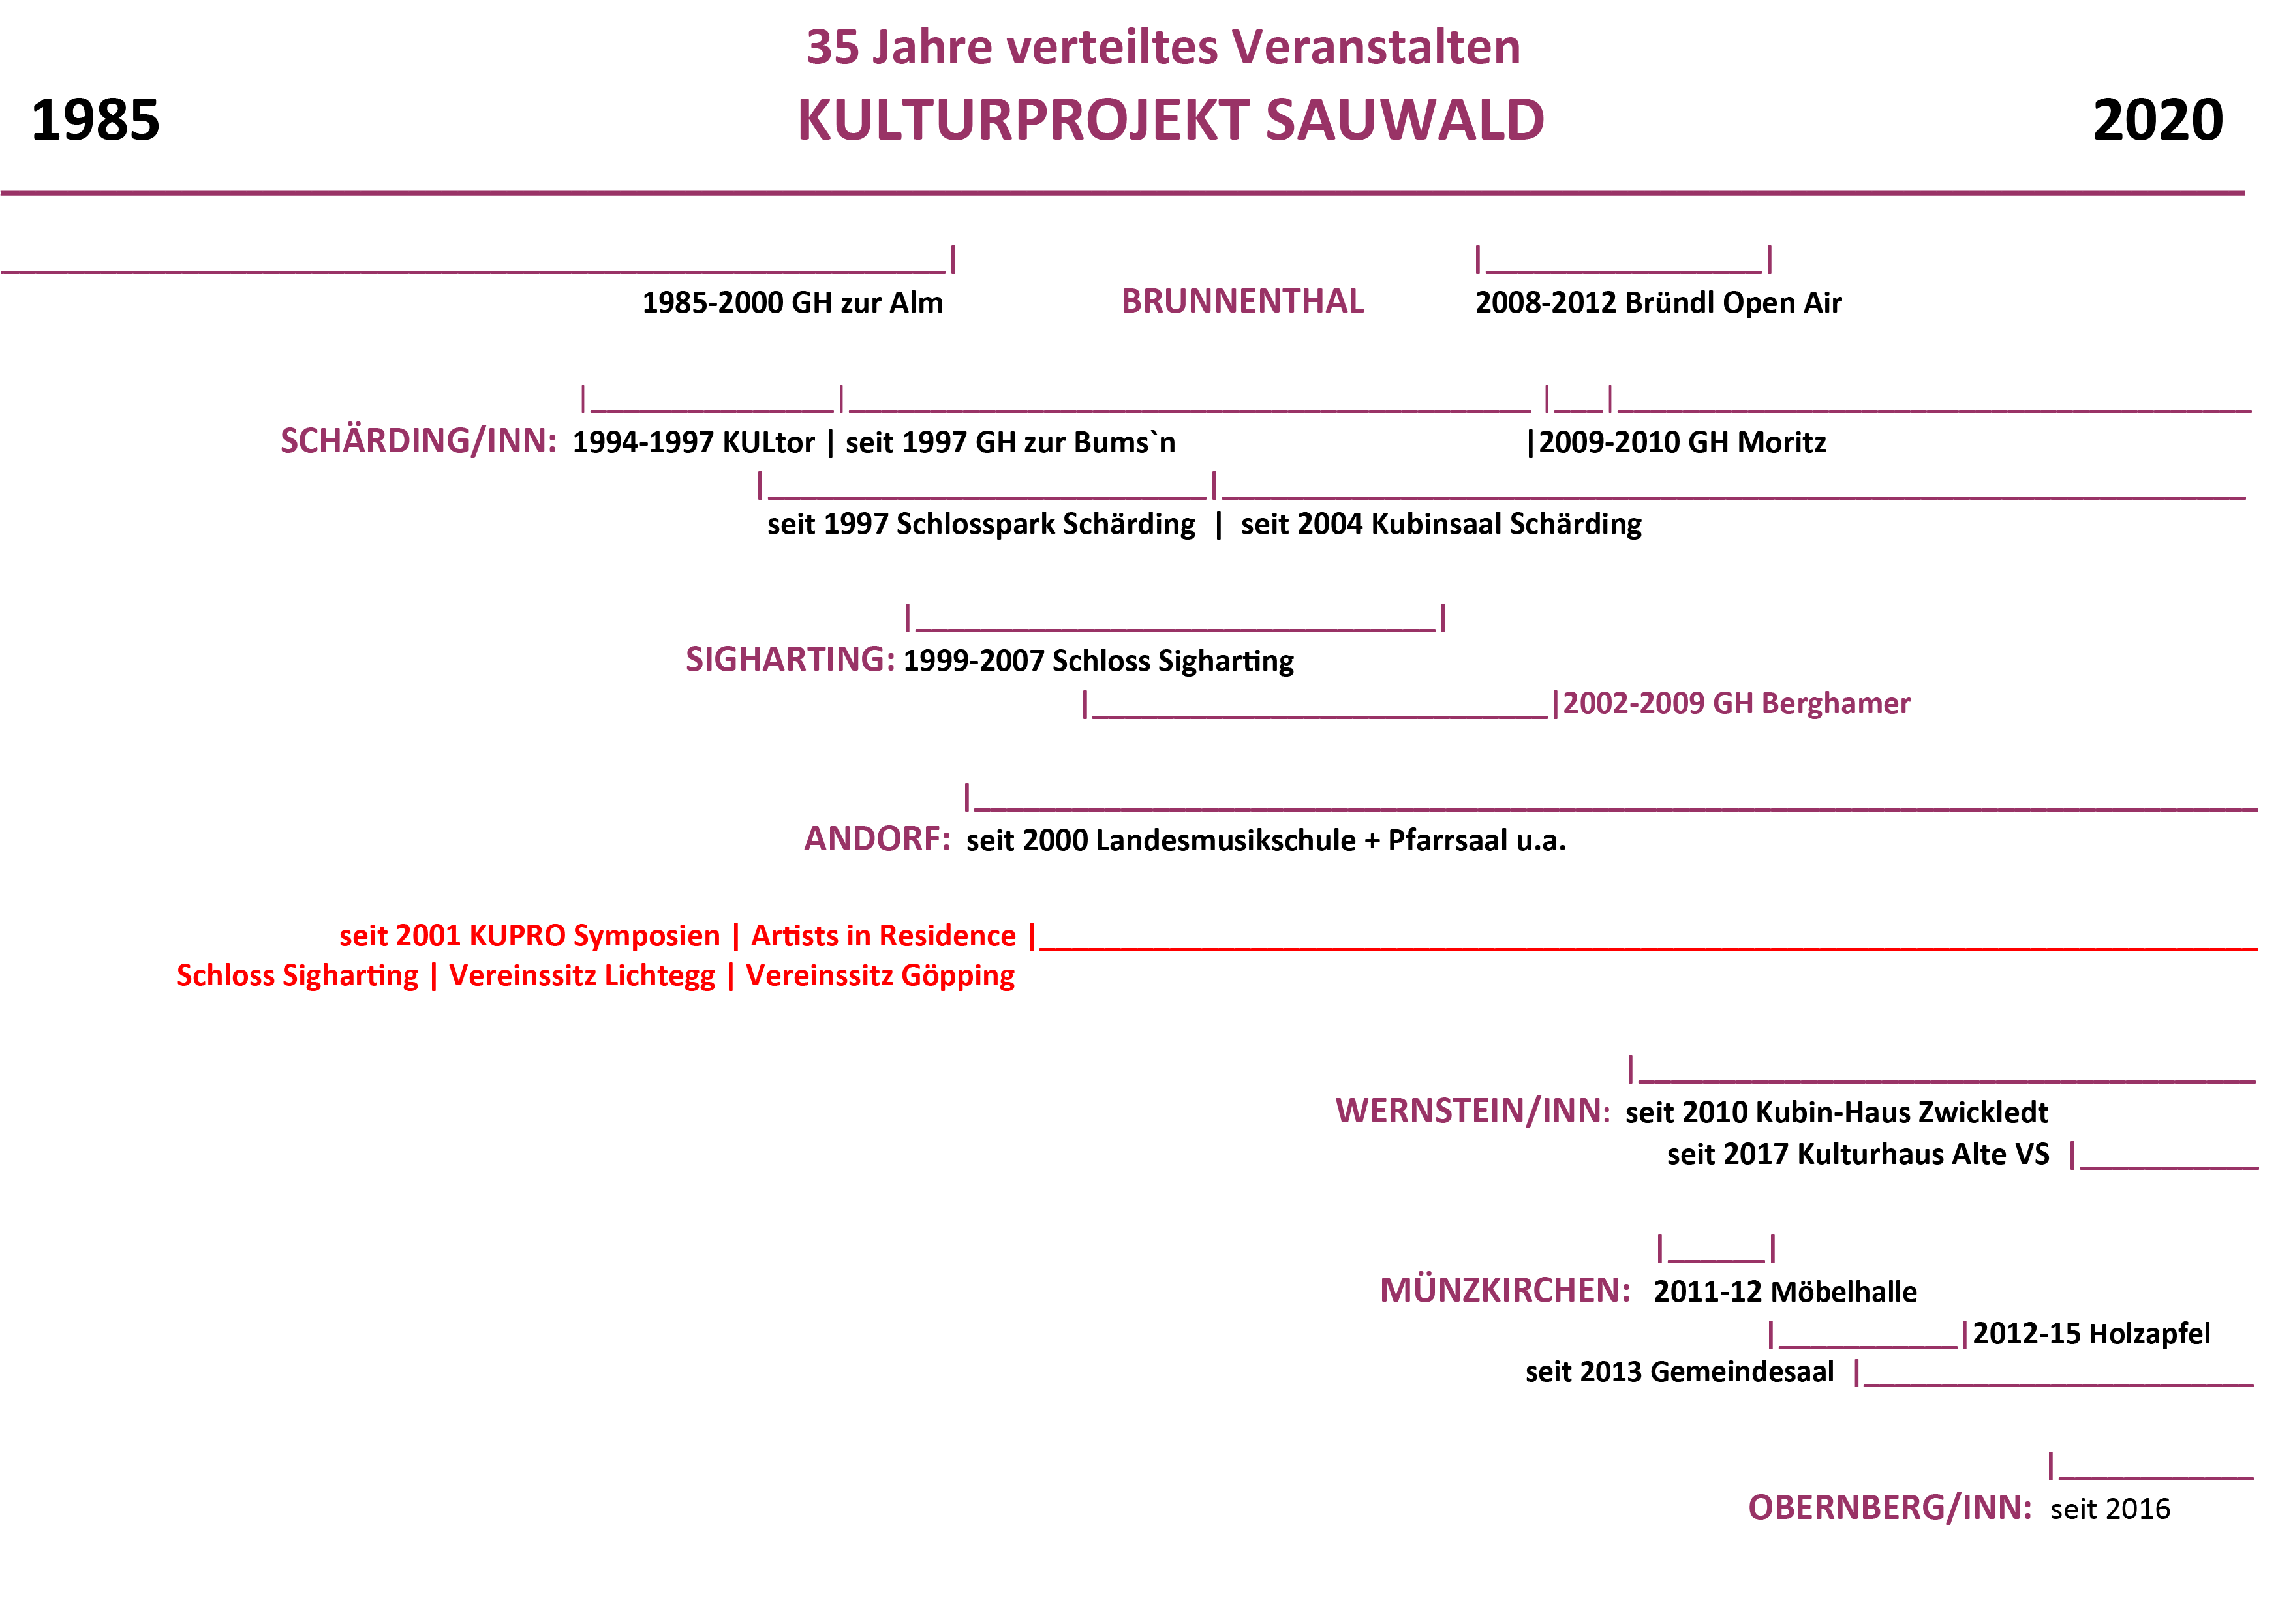 Veranstaltungsorte Kupro Sauwald 1985-2020